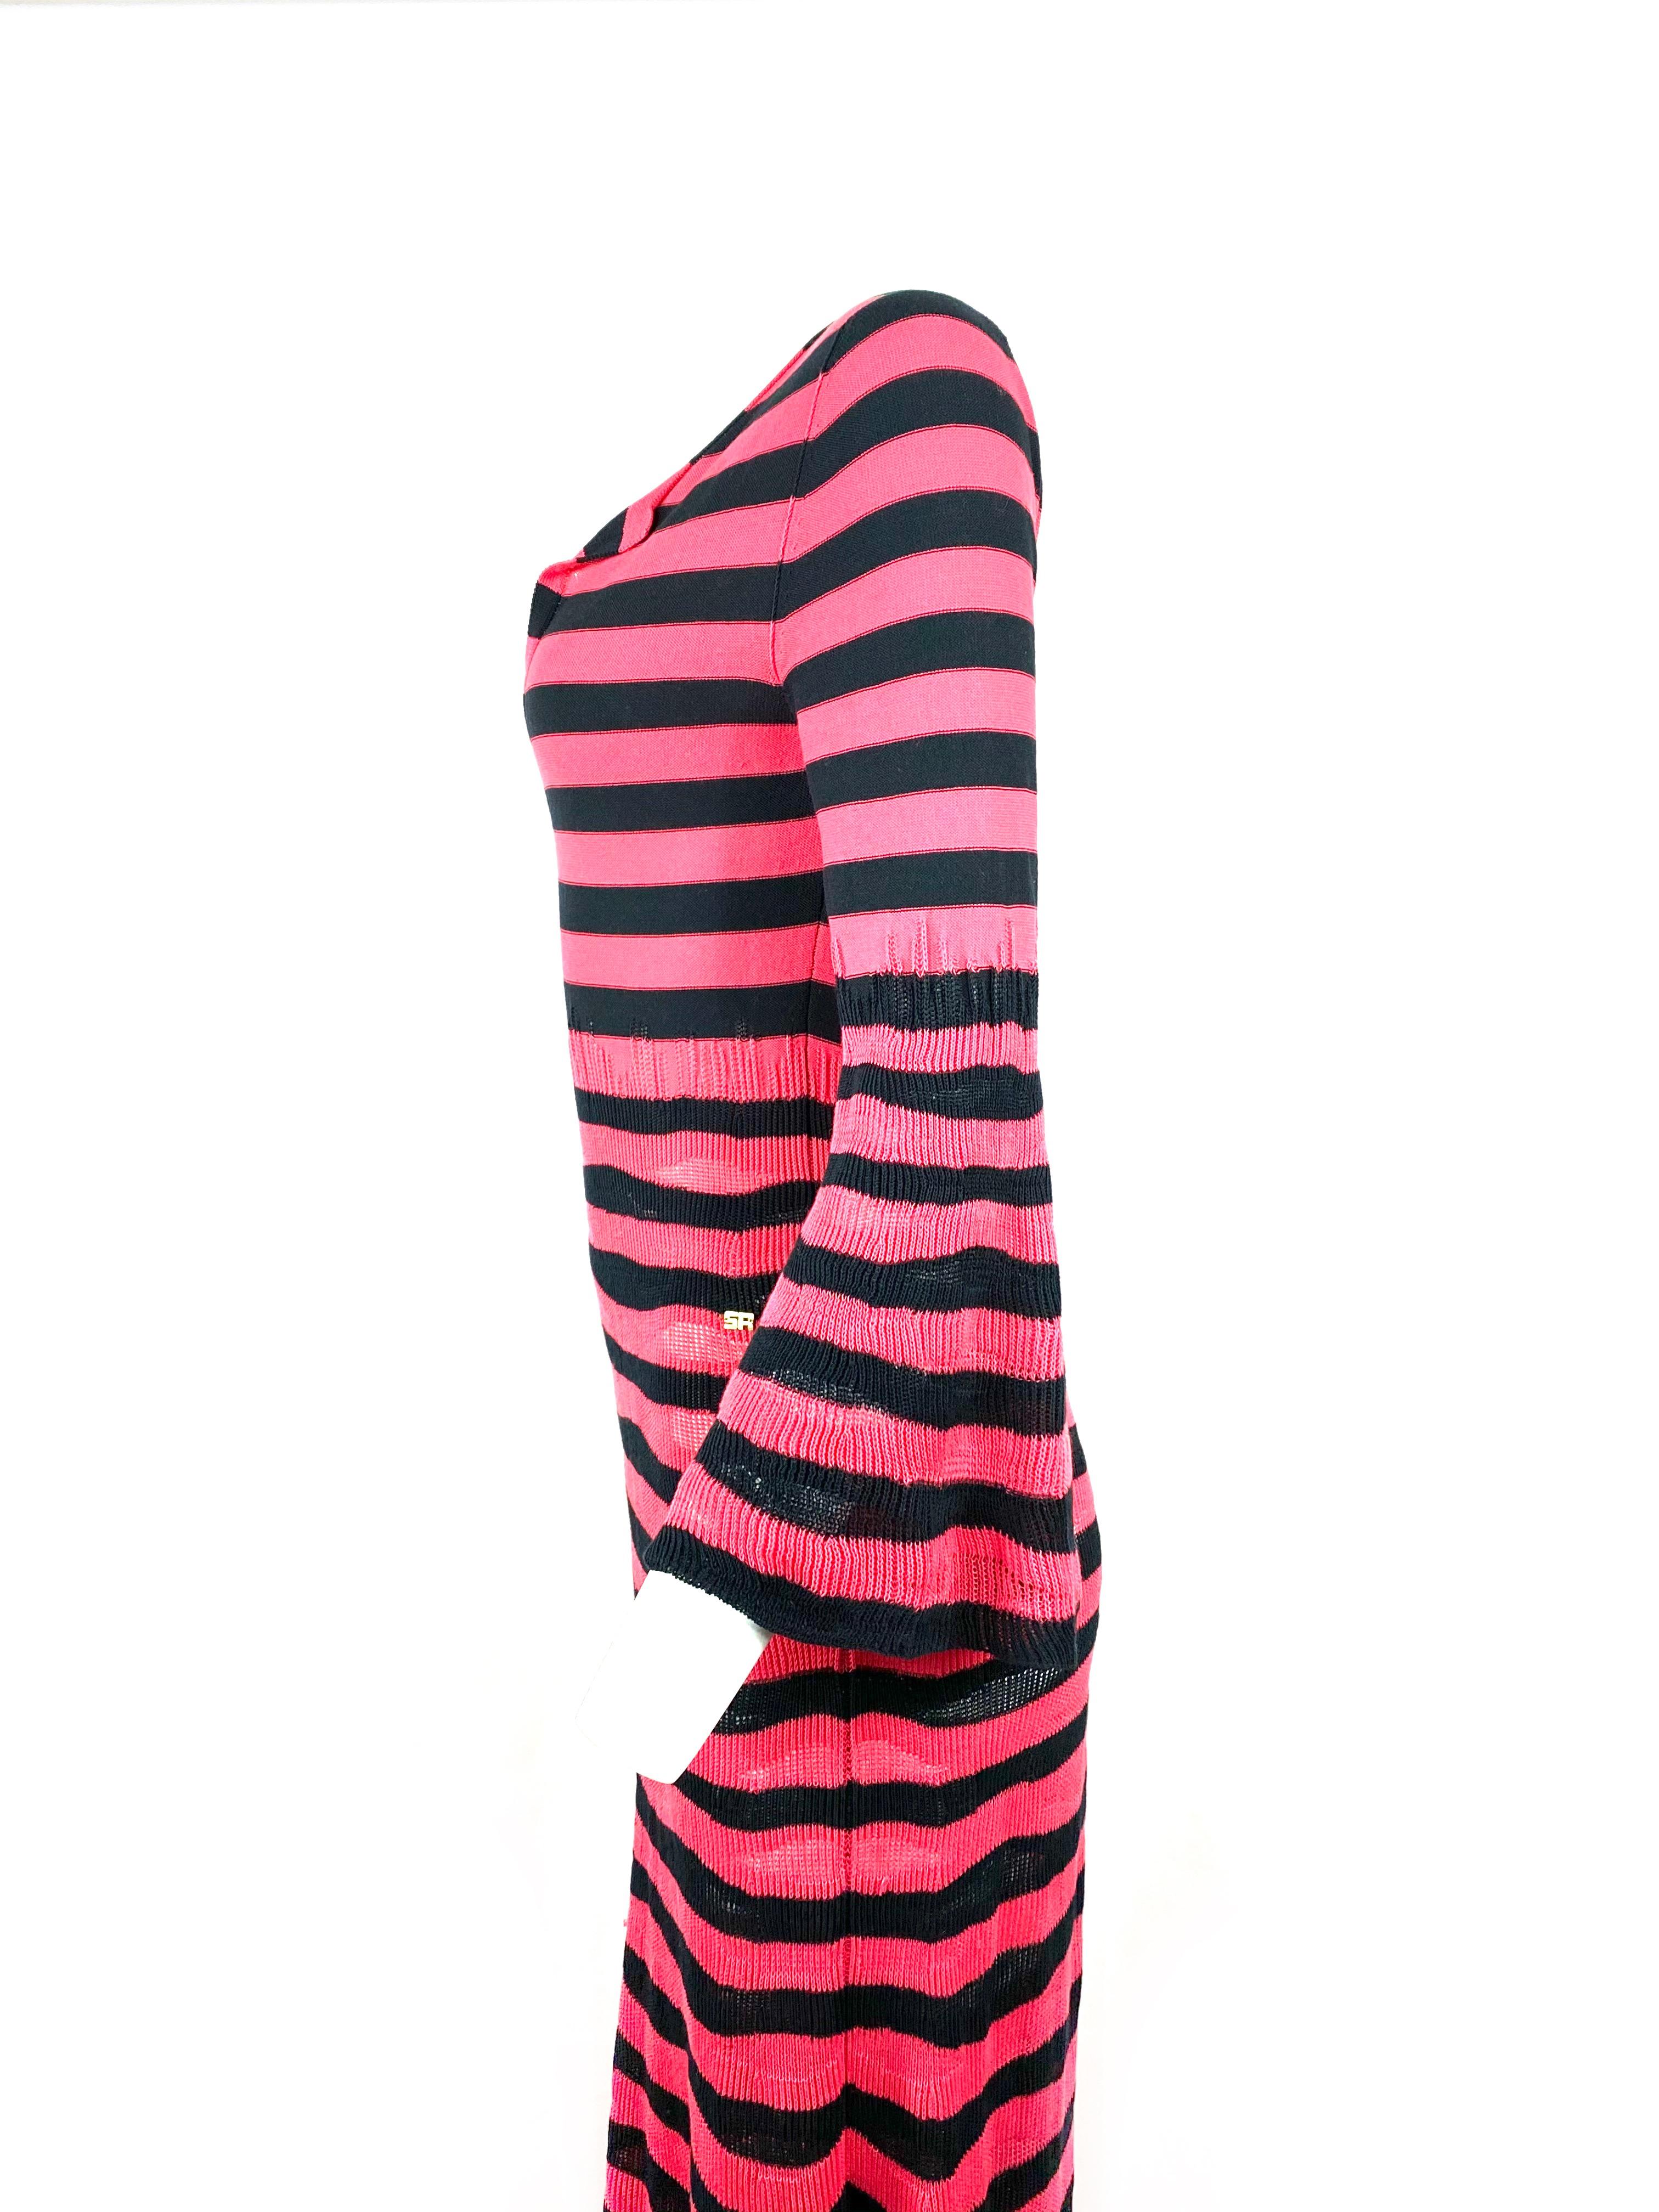 Women's Sonia Rykiel Paris Pink and Navy Striped Maxi Dress w/ Flower Brooch Size 38 For Sale